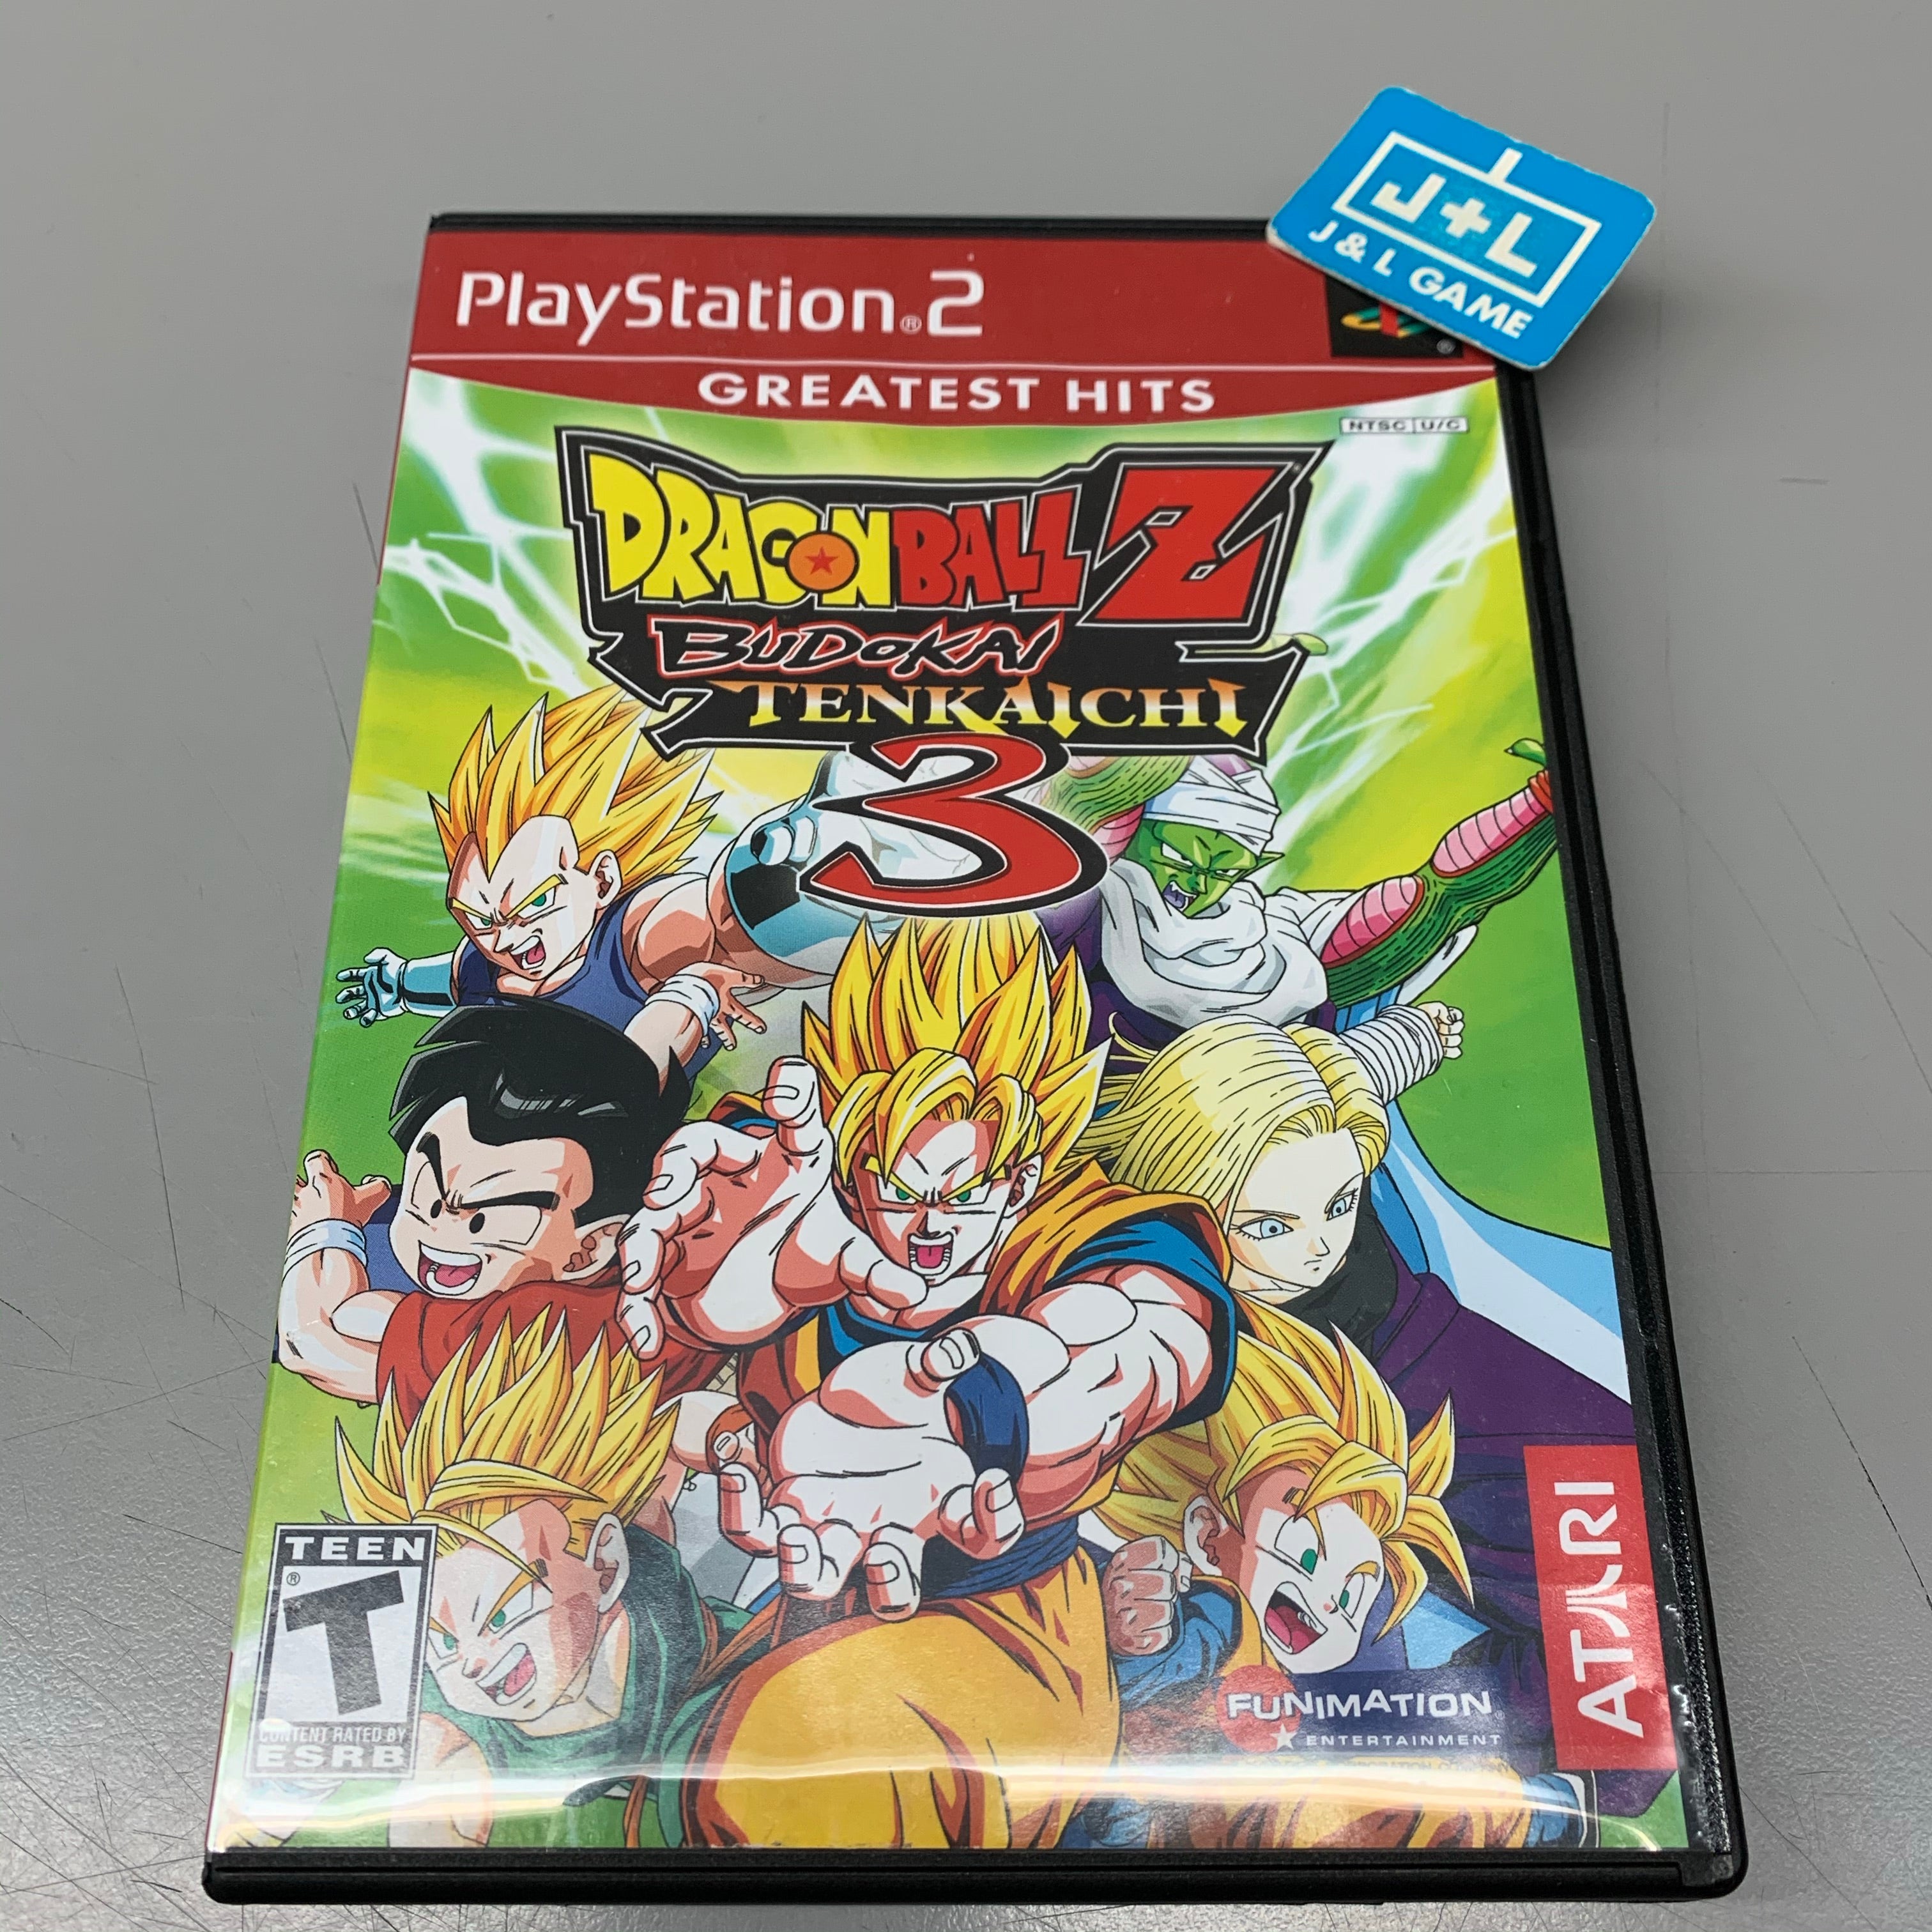 Dragon Ball Z: Budokai Tenkaichi 3 (Greatest Hits) - (PS2) Playstation 2 [Pre-Owned] Video Games Atari Inc.   